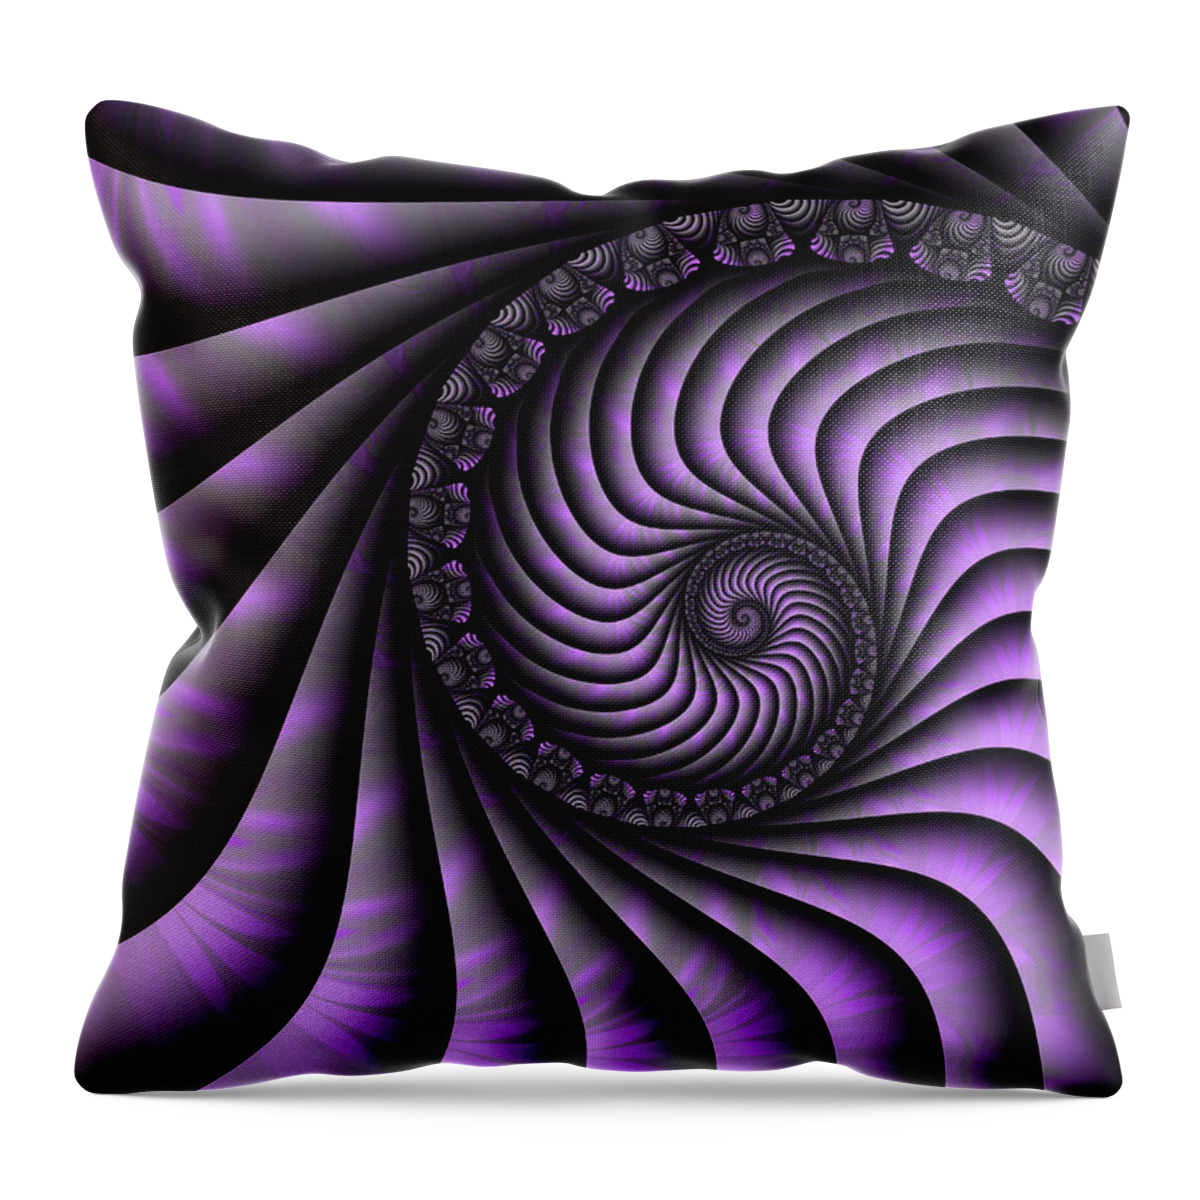 Digital Art Throw Pillow featuring the digital art Spiral Purple and Grey by Gabiw Art